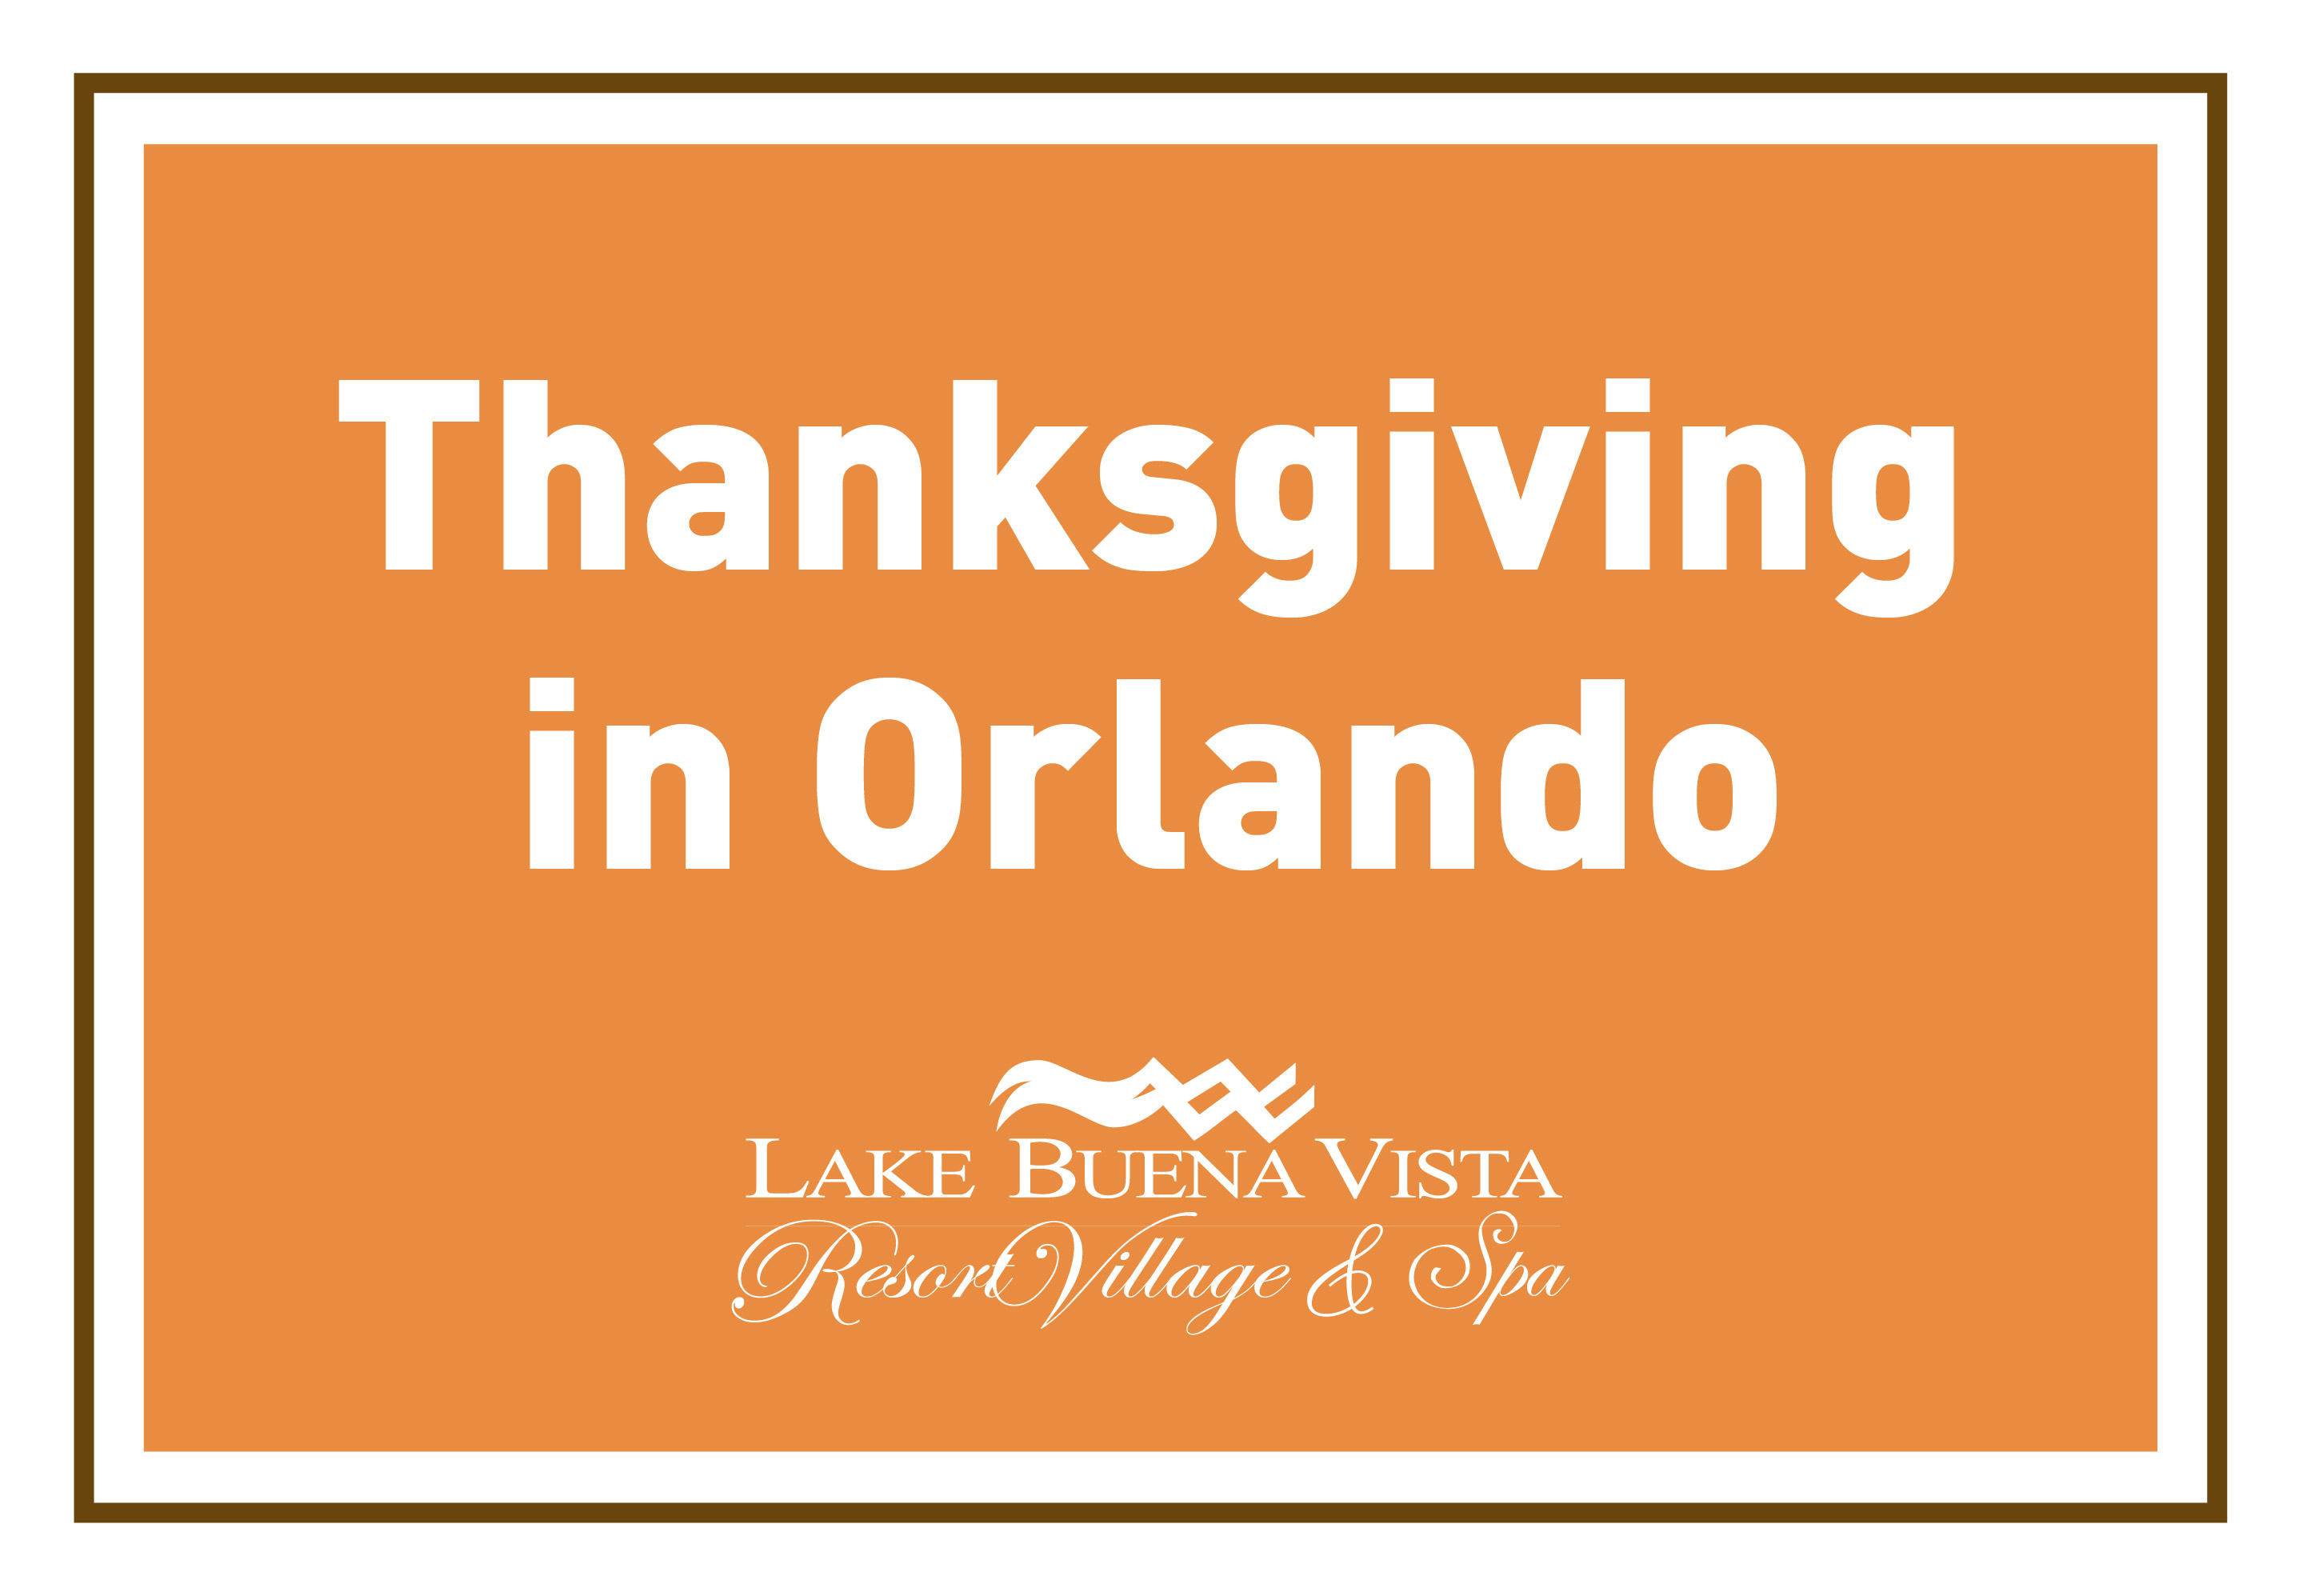 Lake Buena Vista Resort Village & Spa - thanksgiving in Orlando